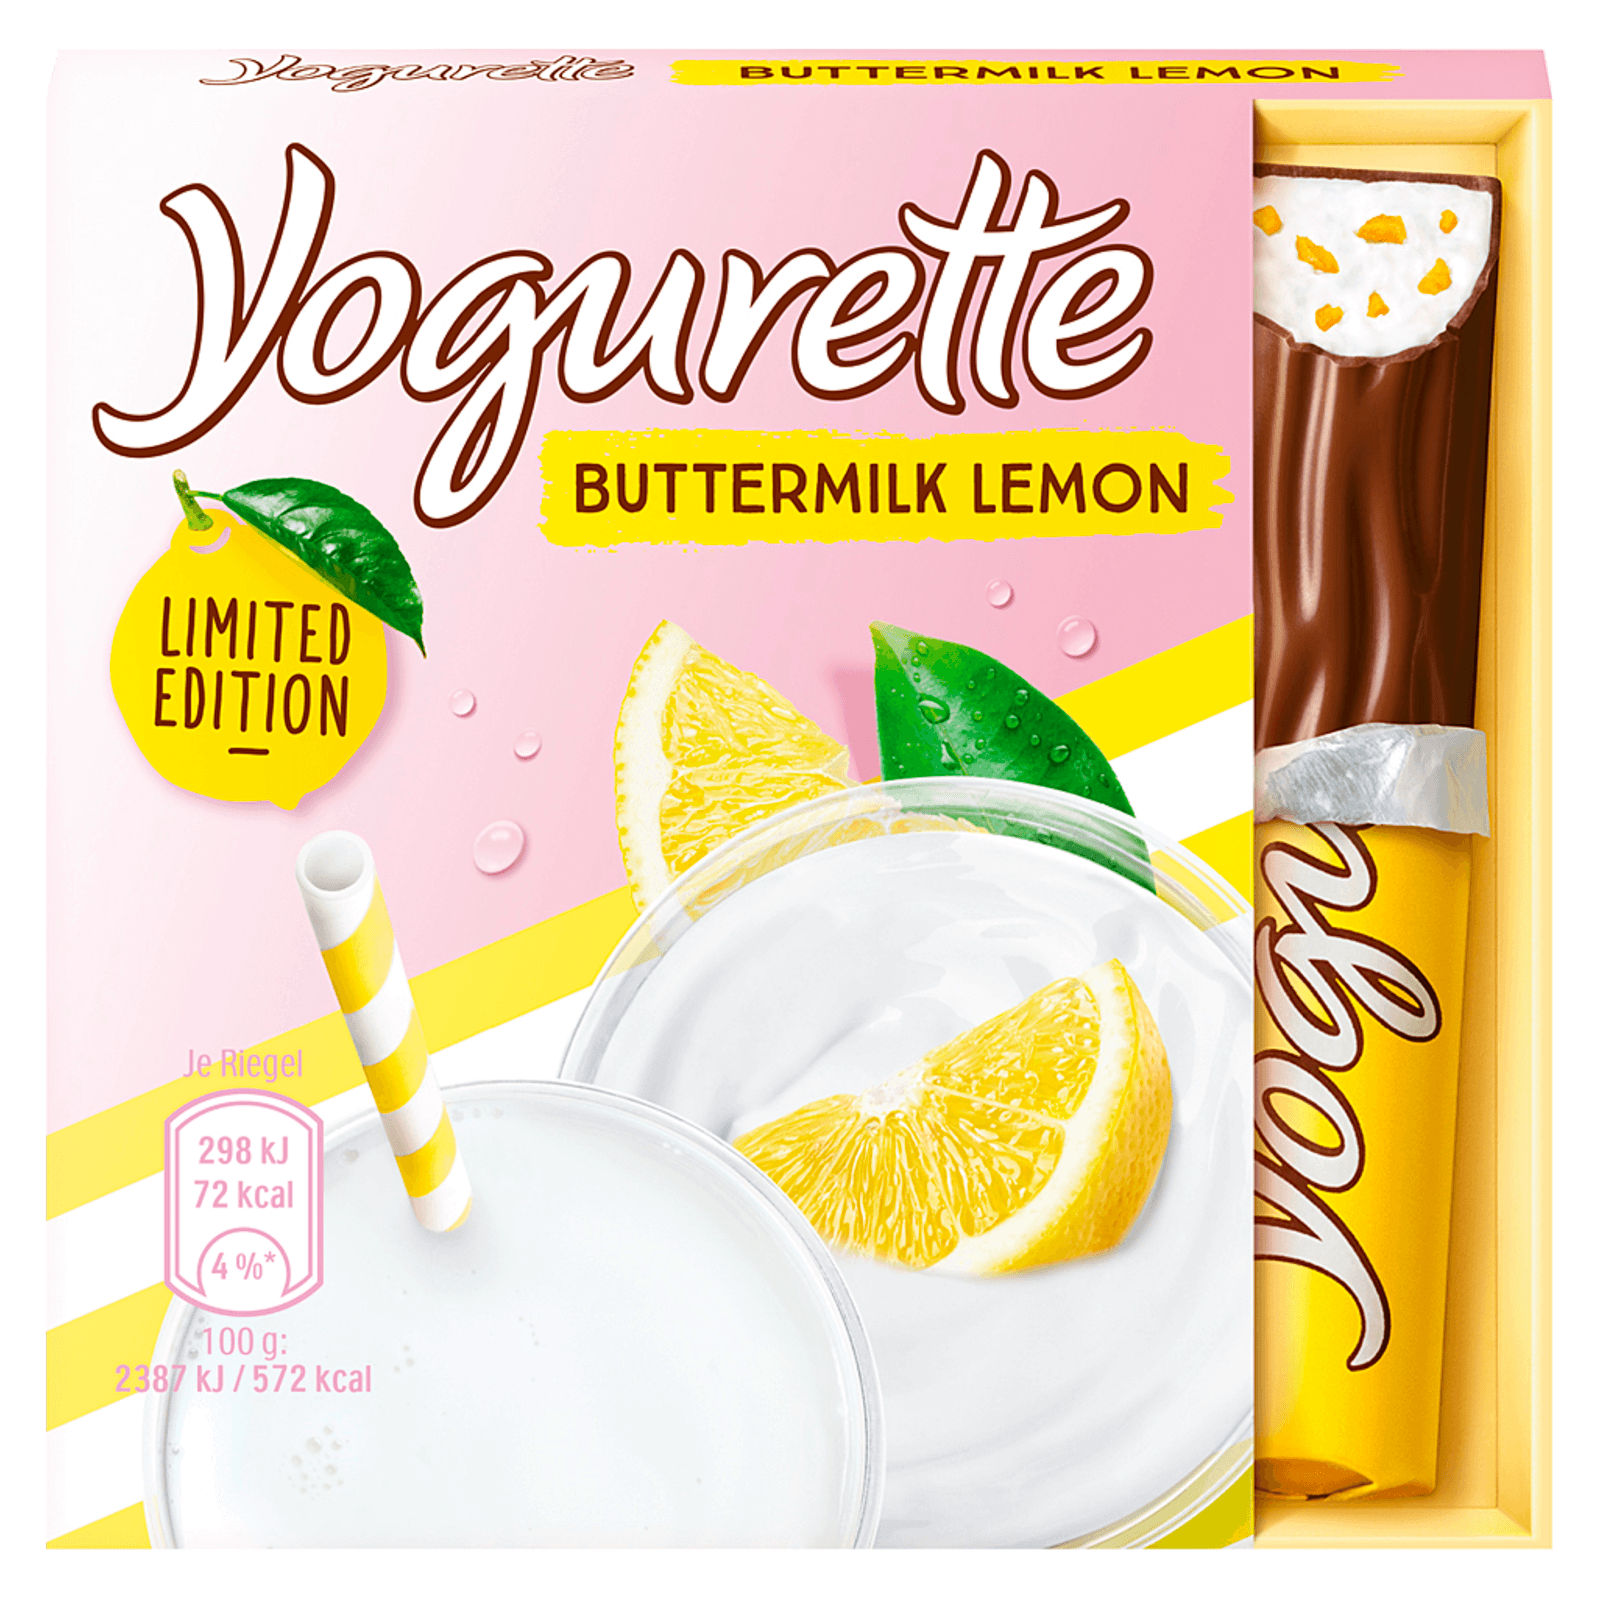 Yogurette Buttermilk Lemon 50g bei online REWE bestellen